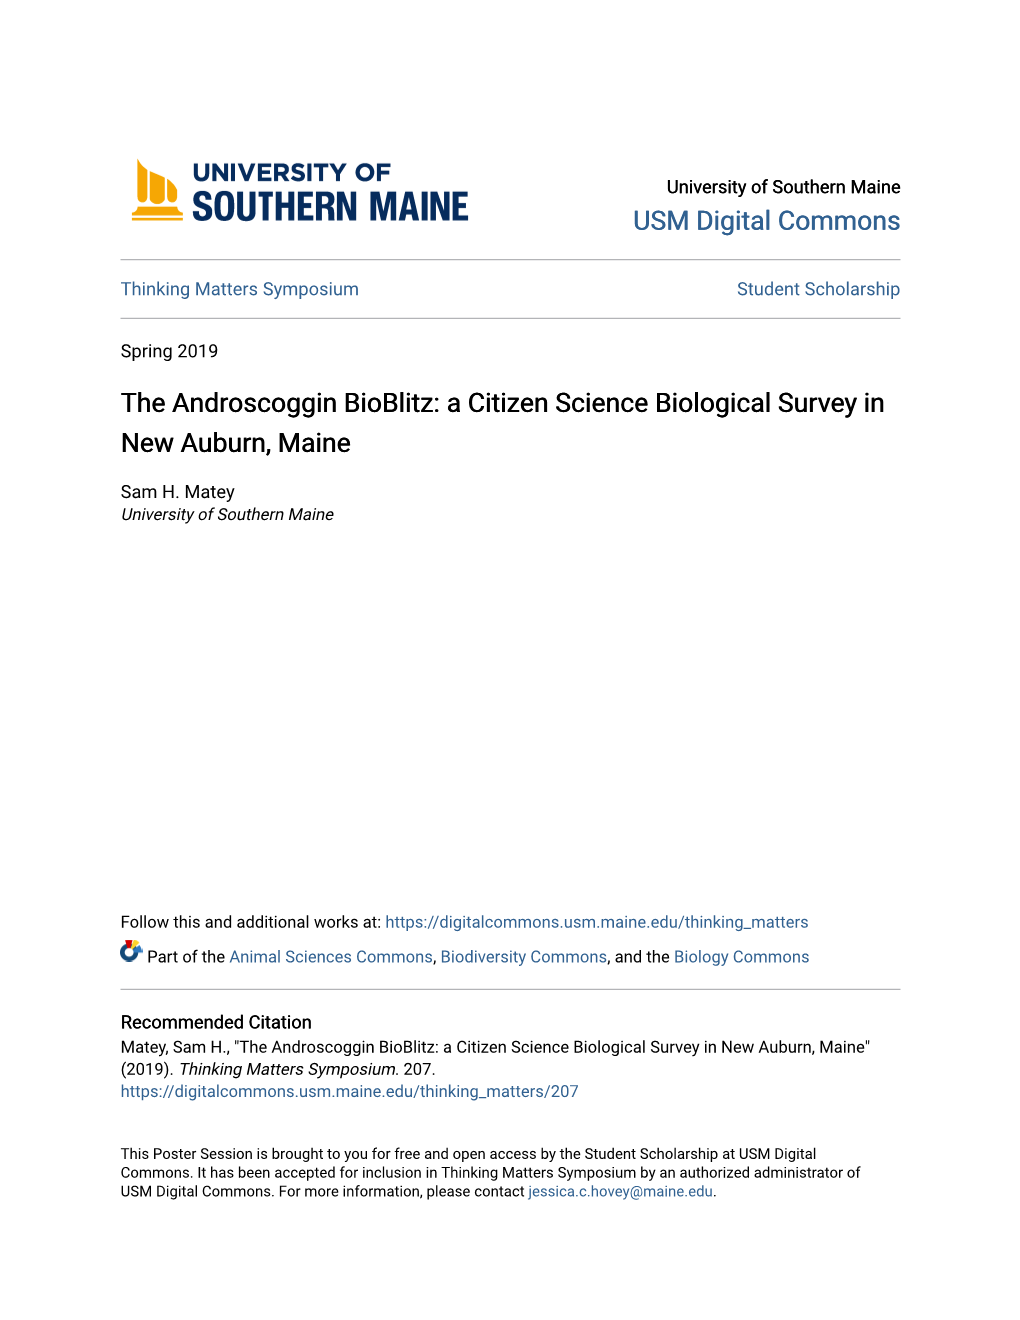 A Citizen Science Biological Survey in New Auburn, Maine